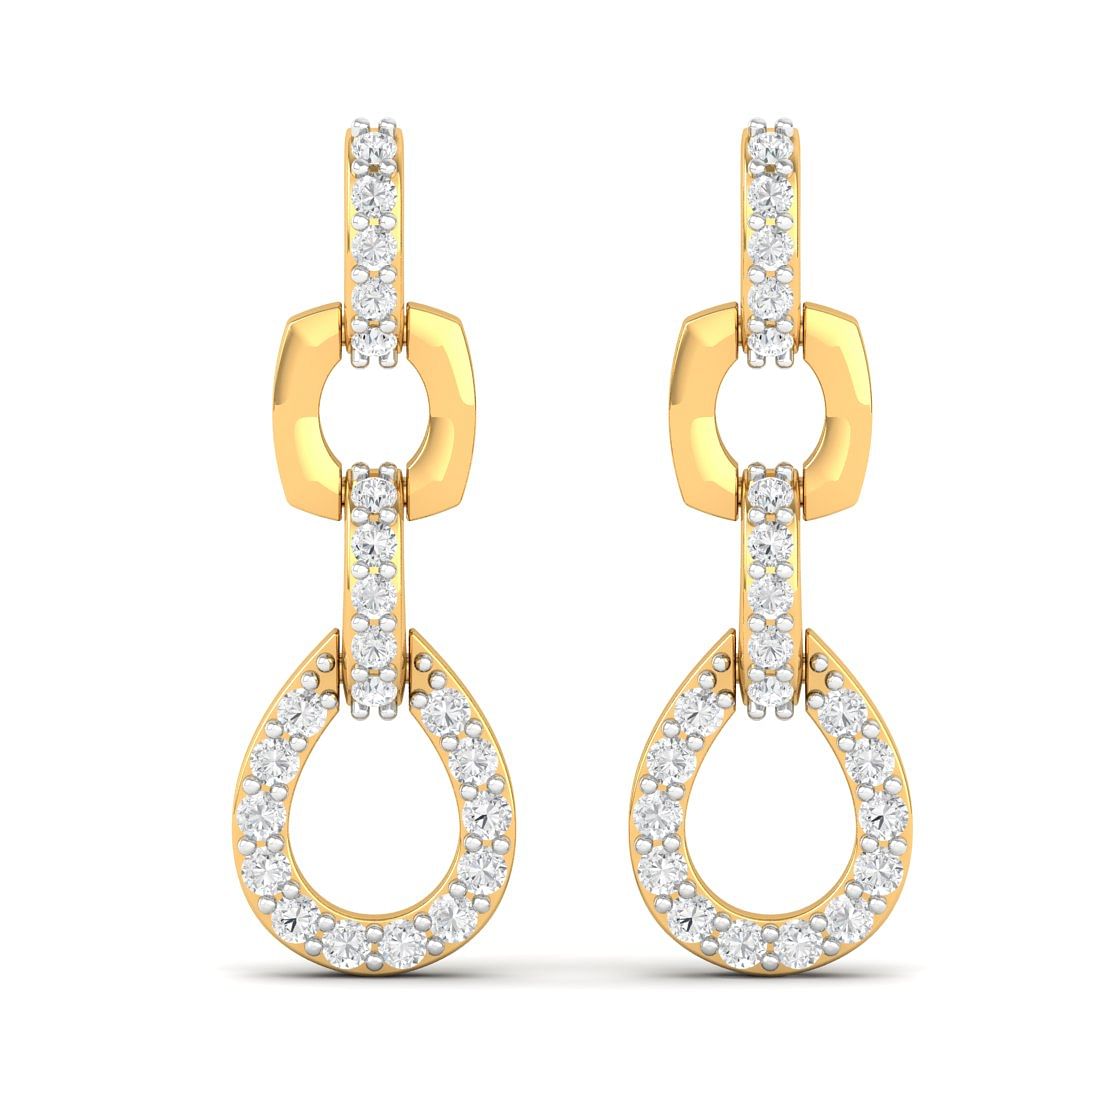 10k Yellow Gold Drops Of Heaven Diamond Earrings For Gift